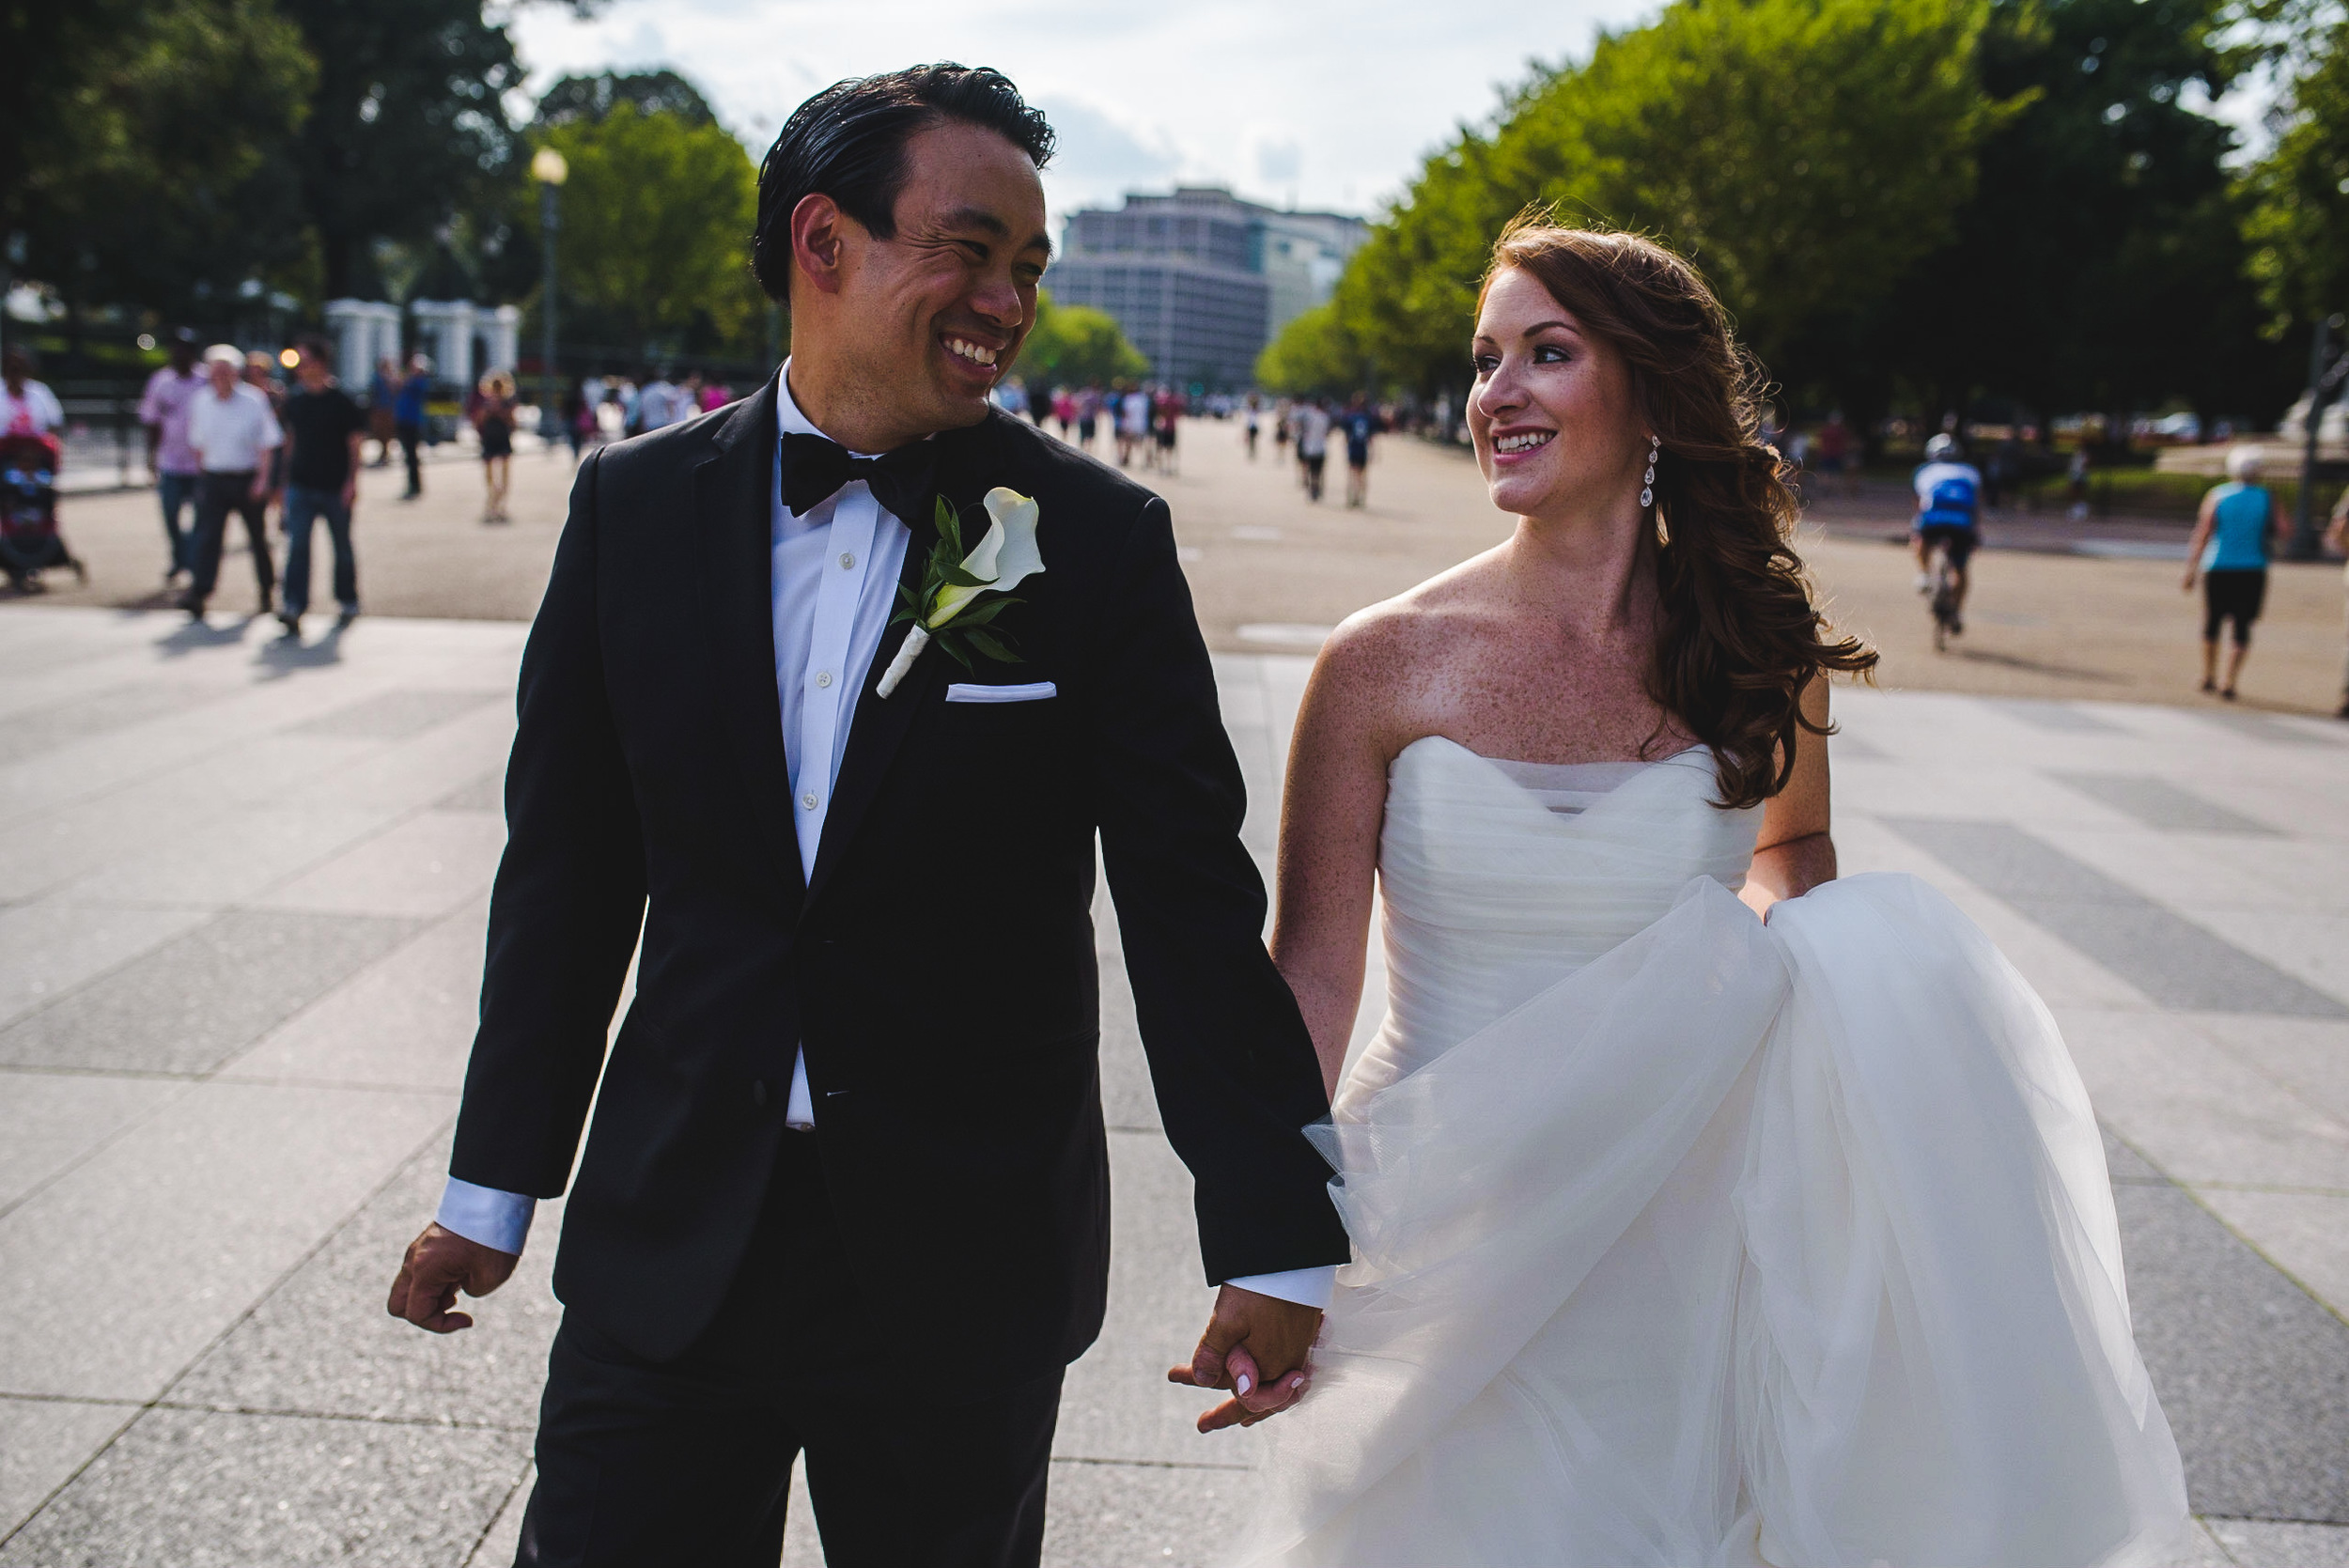 Wedding at W Hotel Washington DC by Mantas Kubilinskas-8.jpg